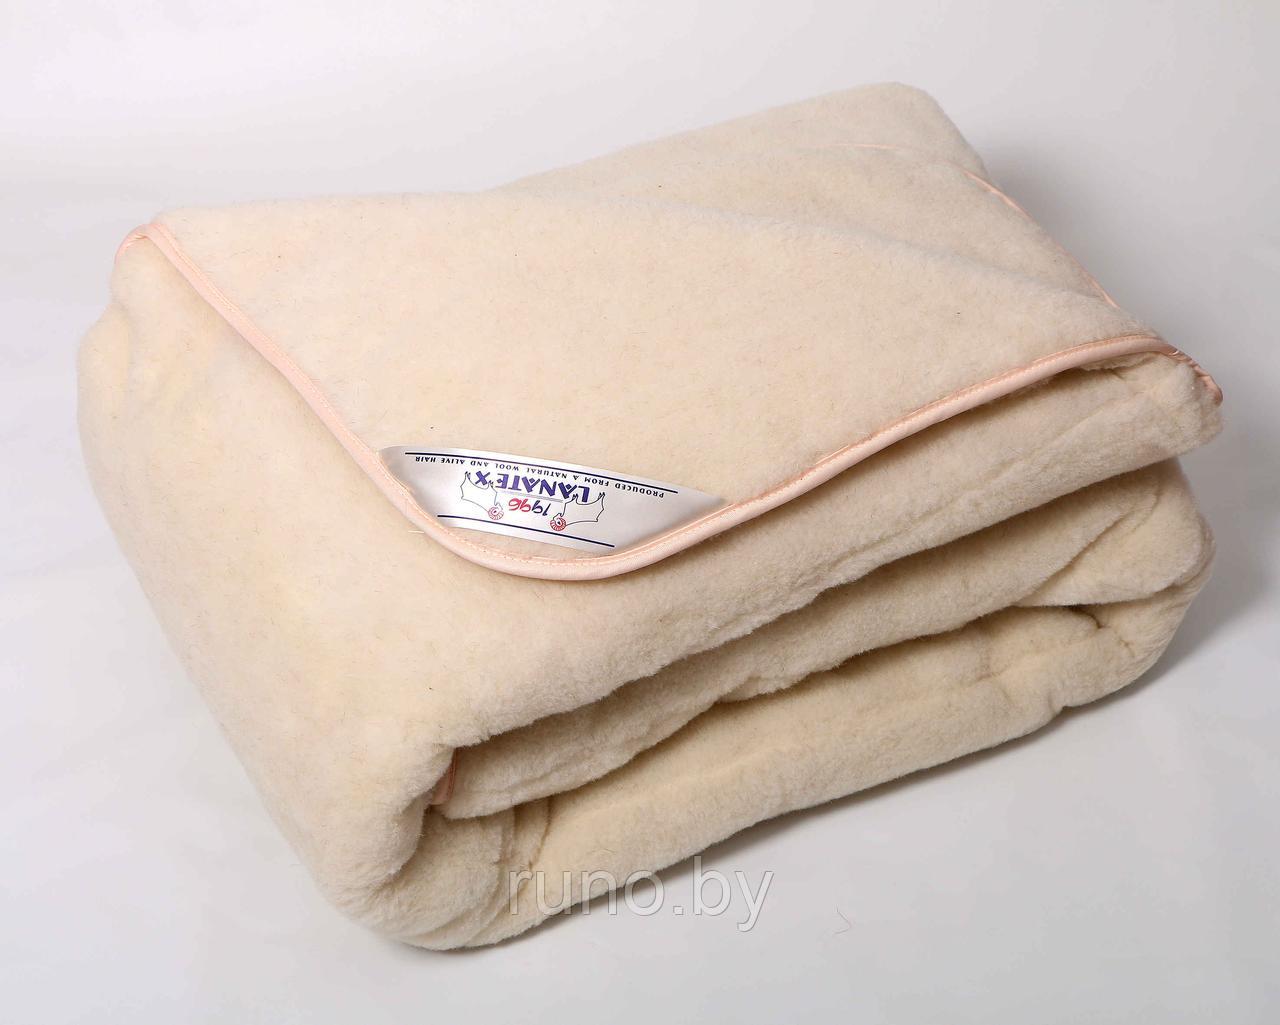 Одеяло (плед) из овечьей шерсти меховое двустороннее 145 х 205 см, фото 1